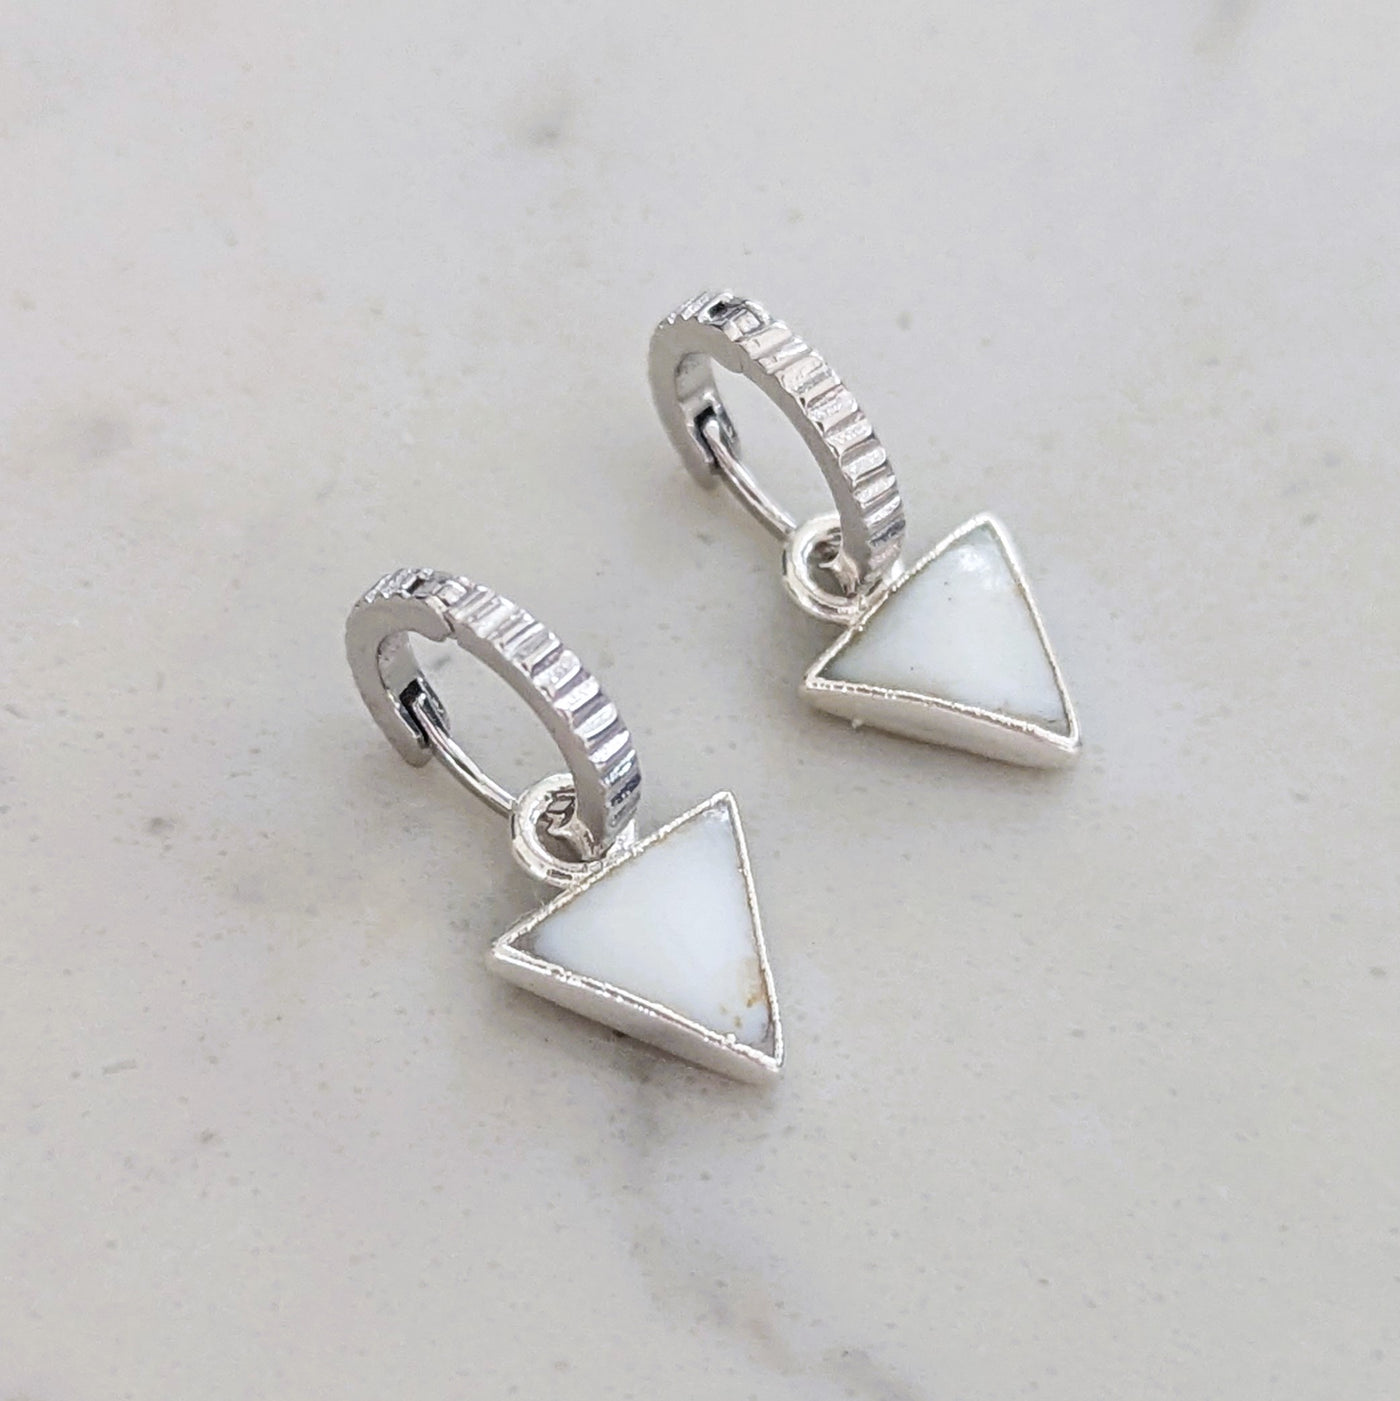 sterling silver mother of pearl triangular charm hoop earrings